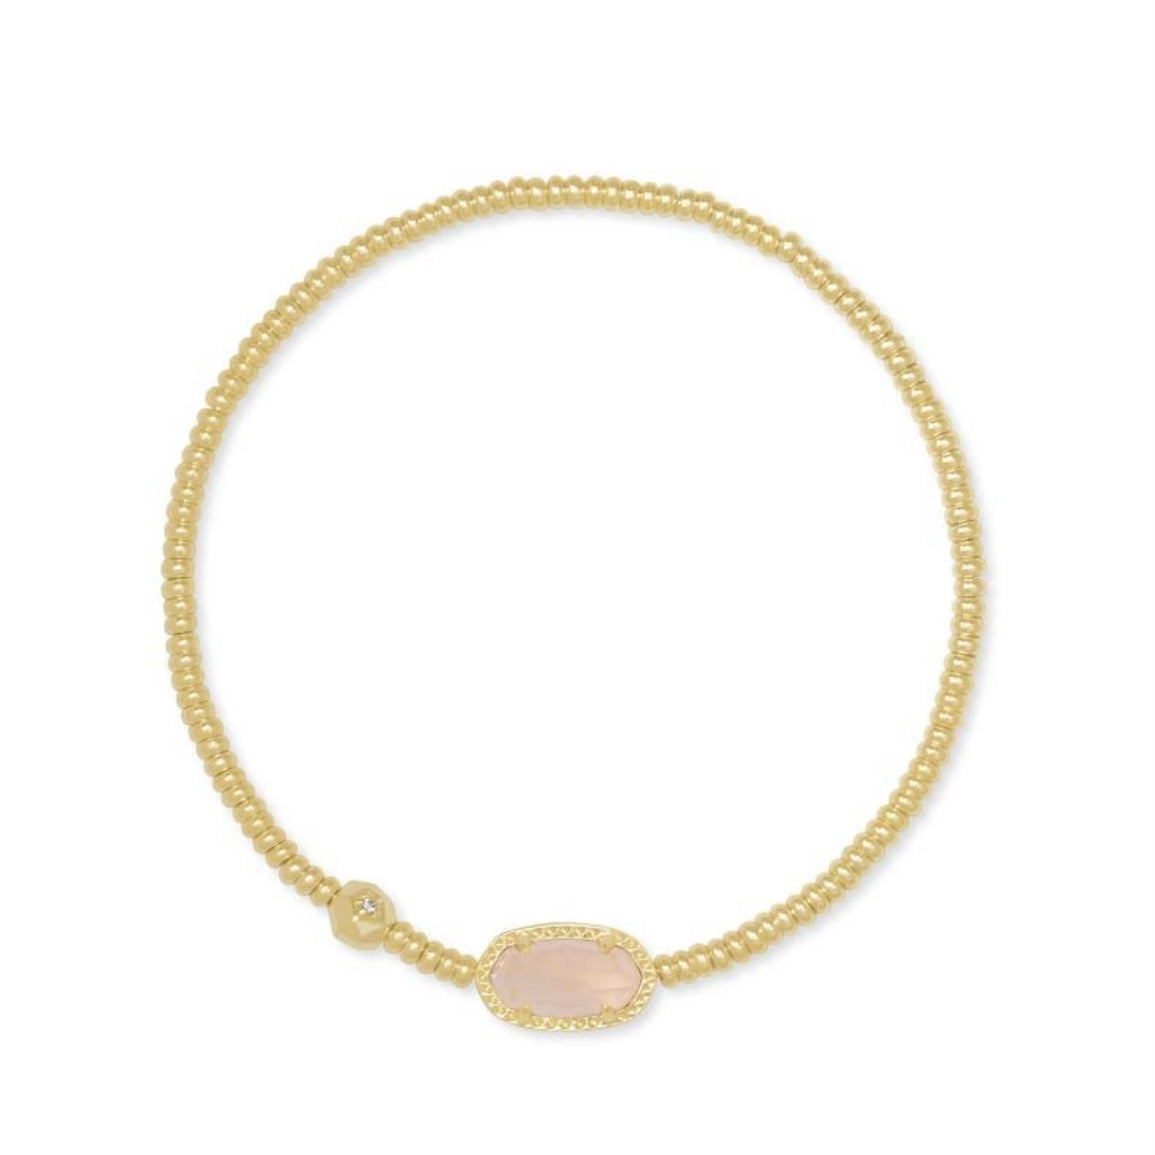 KENDRA SCOTT Grayson Gold Stretch Bracelet in Rose Quartz - The Street Boutique 